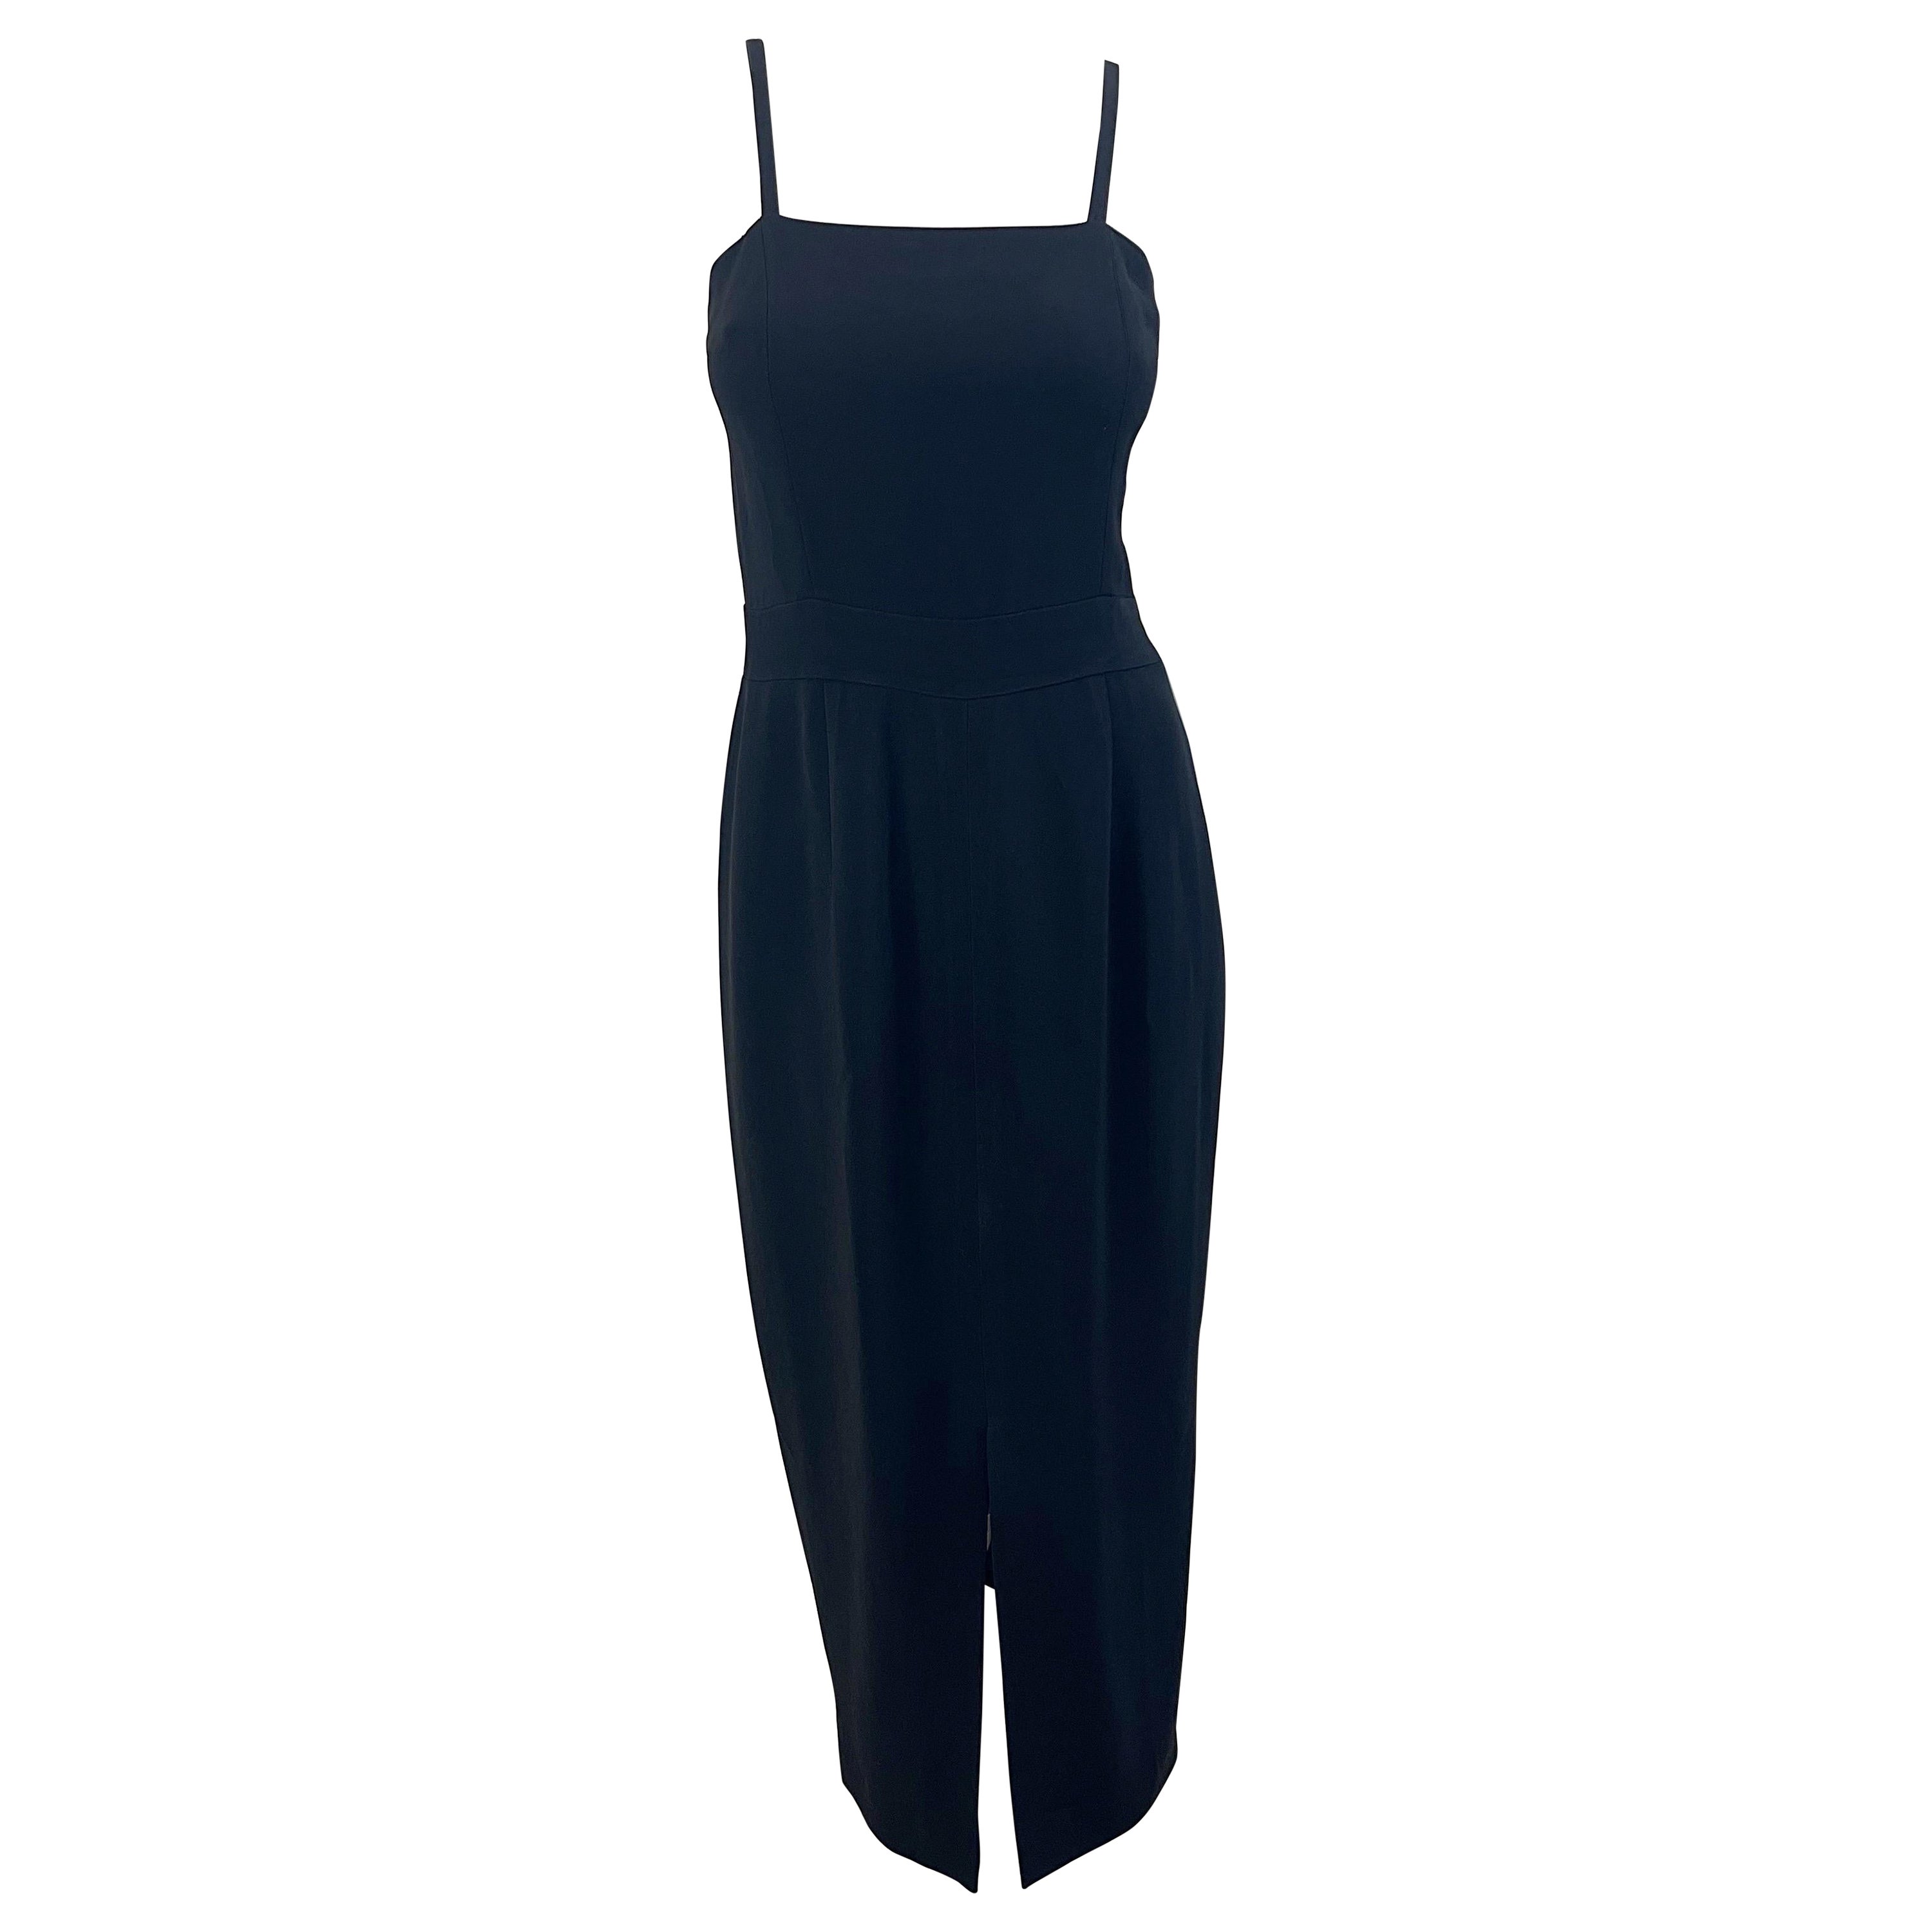 Karl Lagerfeld 1990s Black Sleeveless Timeless Black Vintage 90s Gown Maxi Dress For Sale